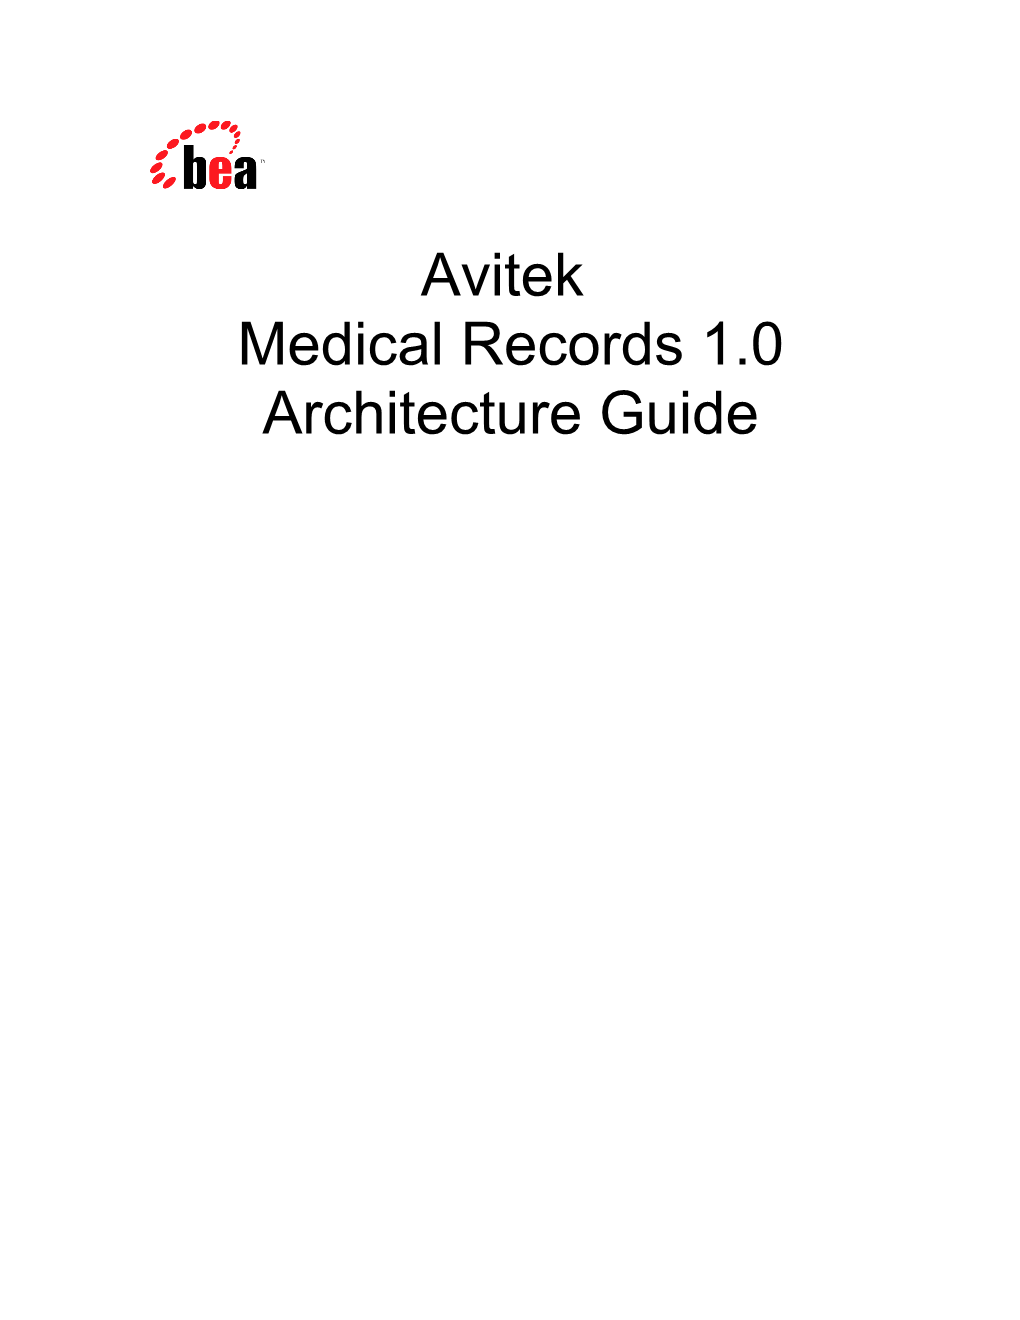 Avitek Medical Records 1.0